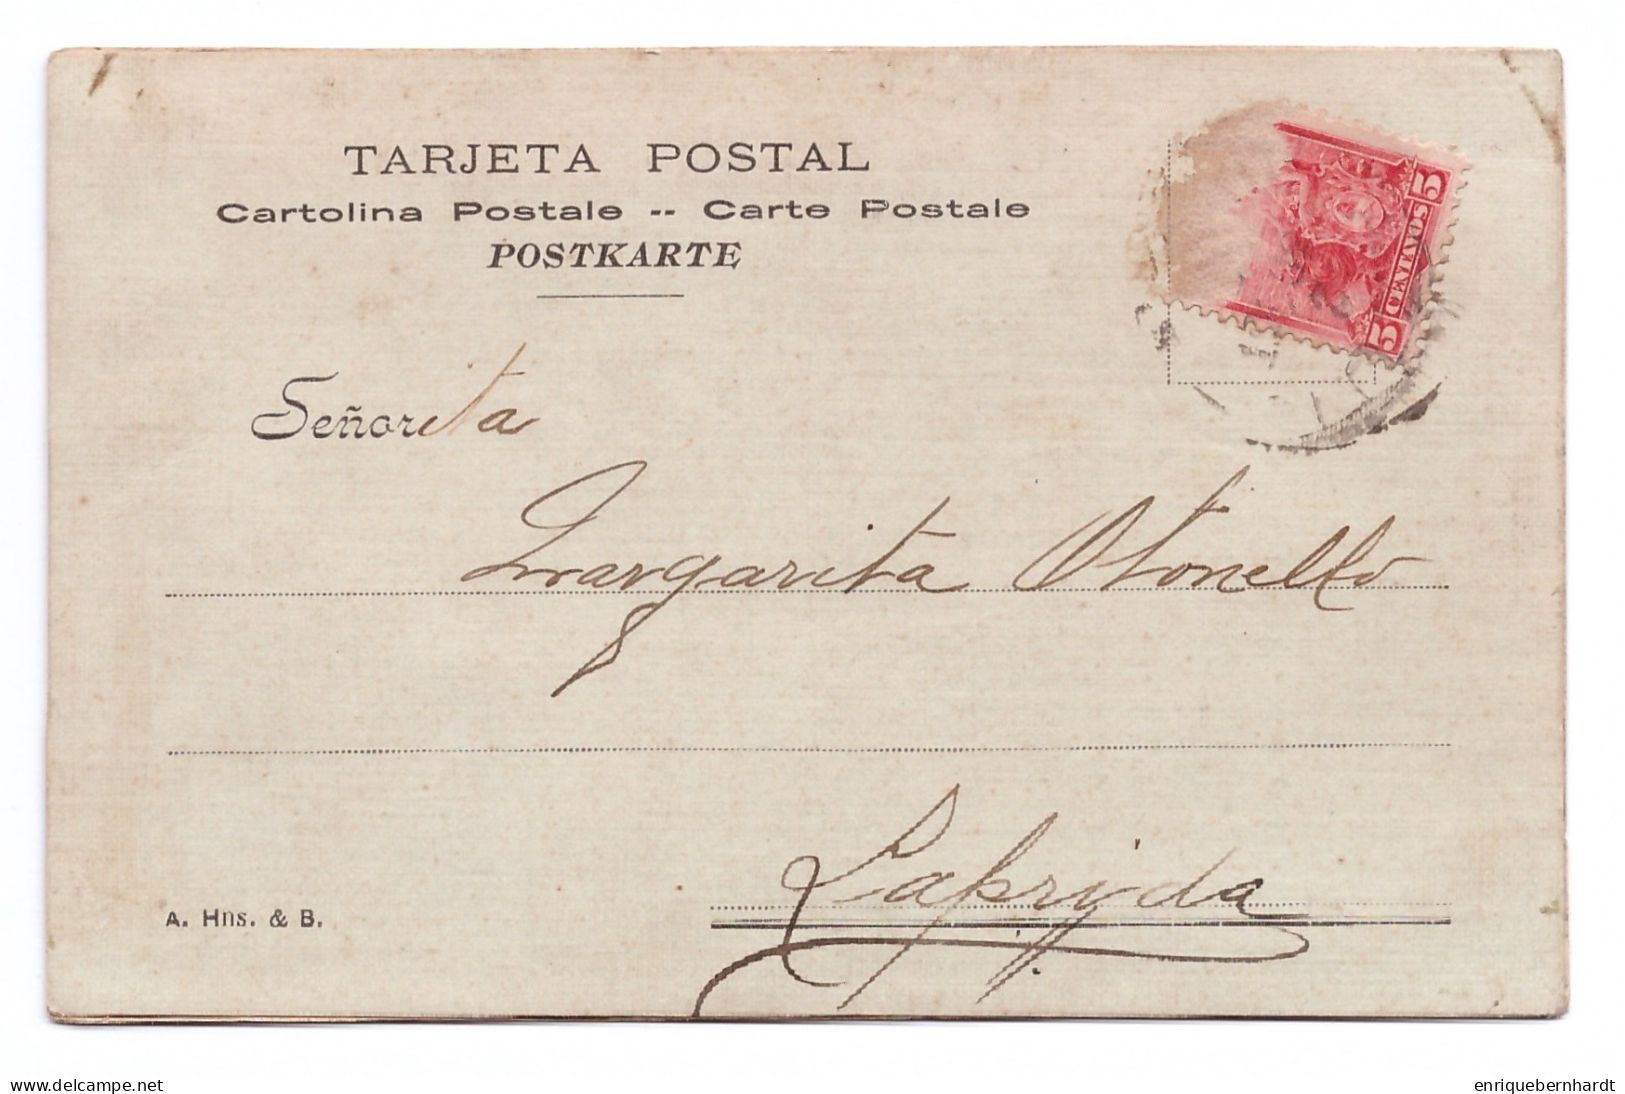 MARGARITA OTONELLO // TARJETA POSTAL PERSONALIZADA // 1905 - Firstnames